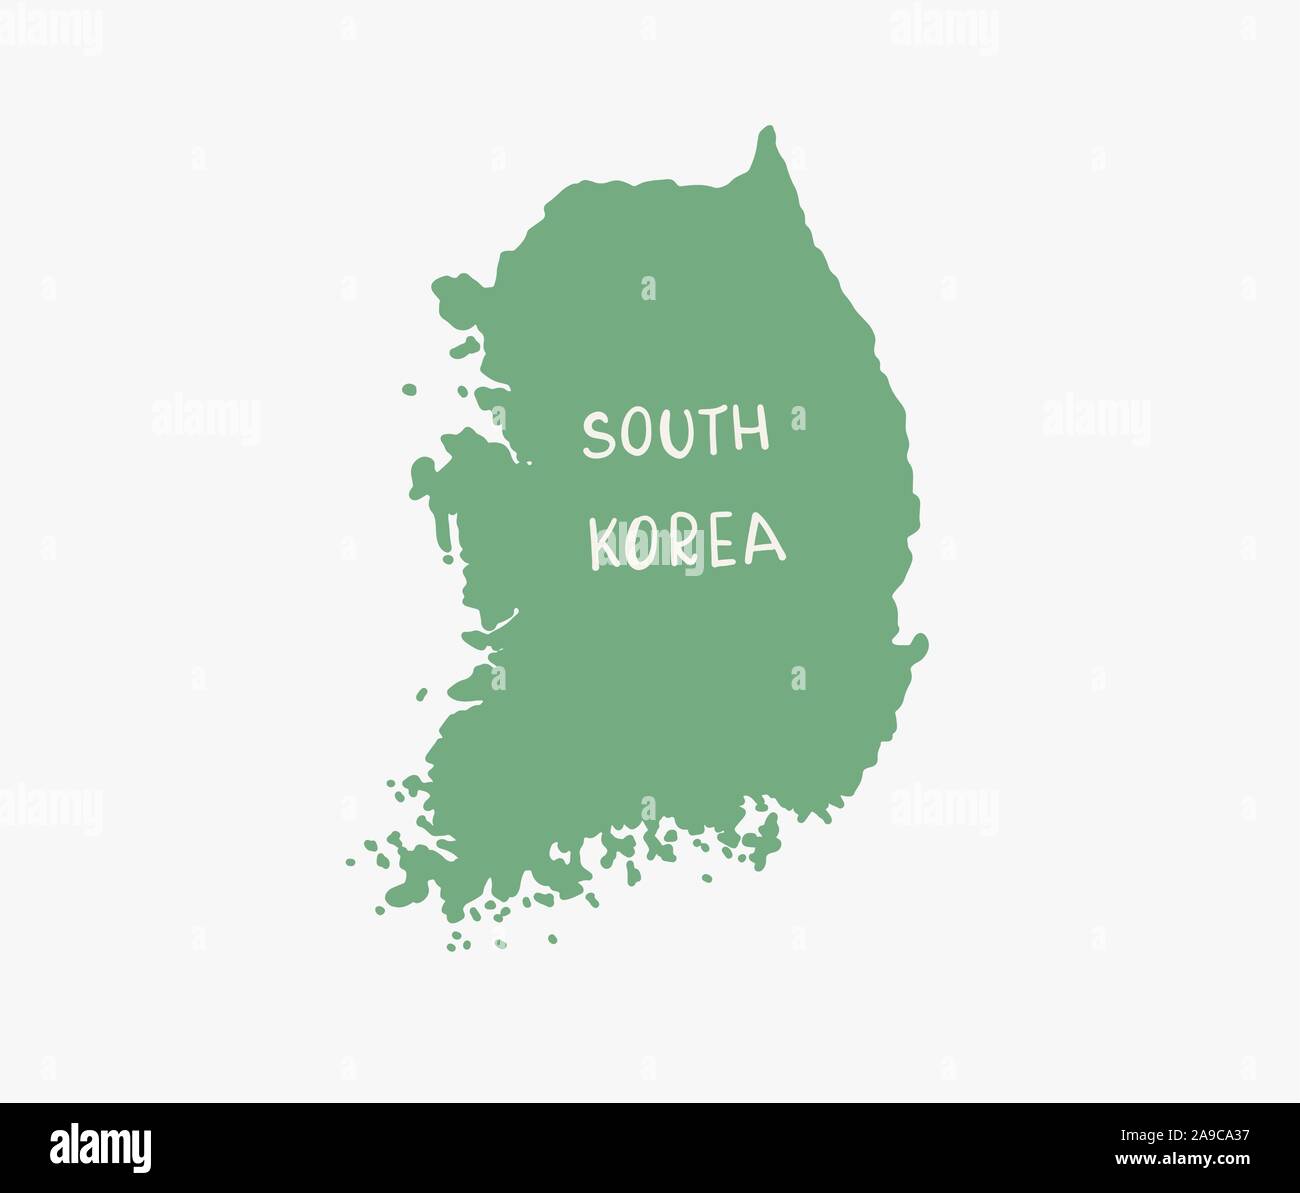 vector illustration of South Korea map Stock Vector